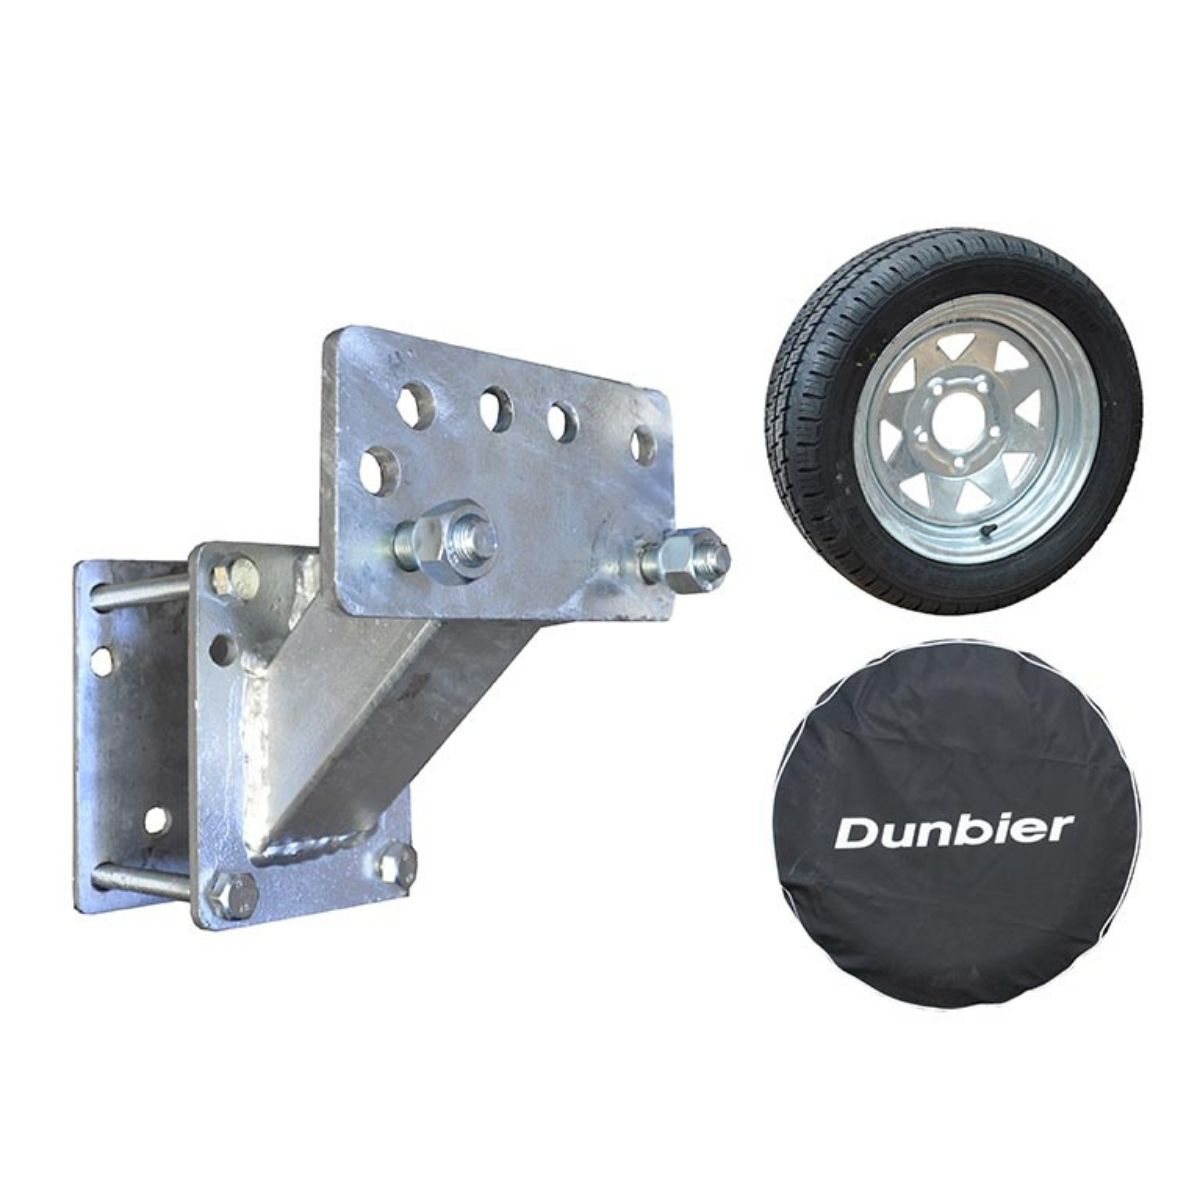 Dunbier spare wheel carrier (universal).